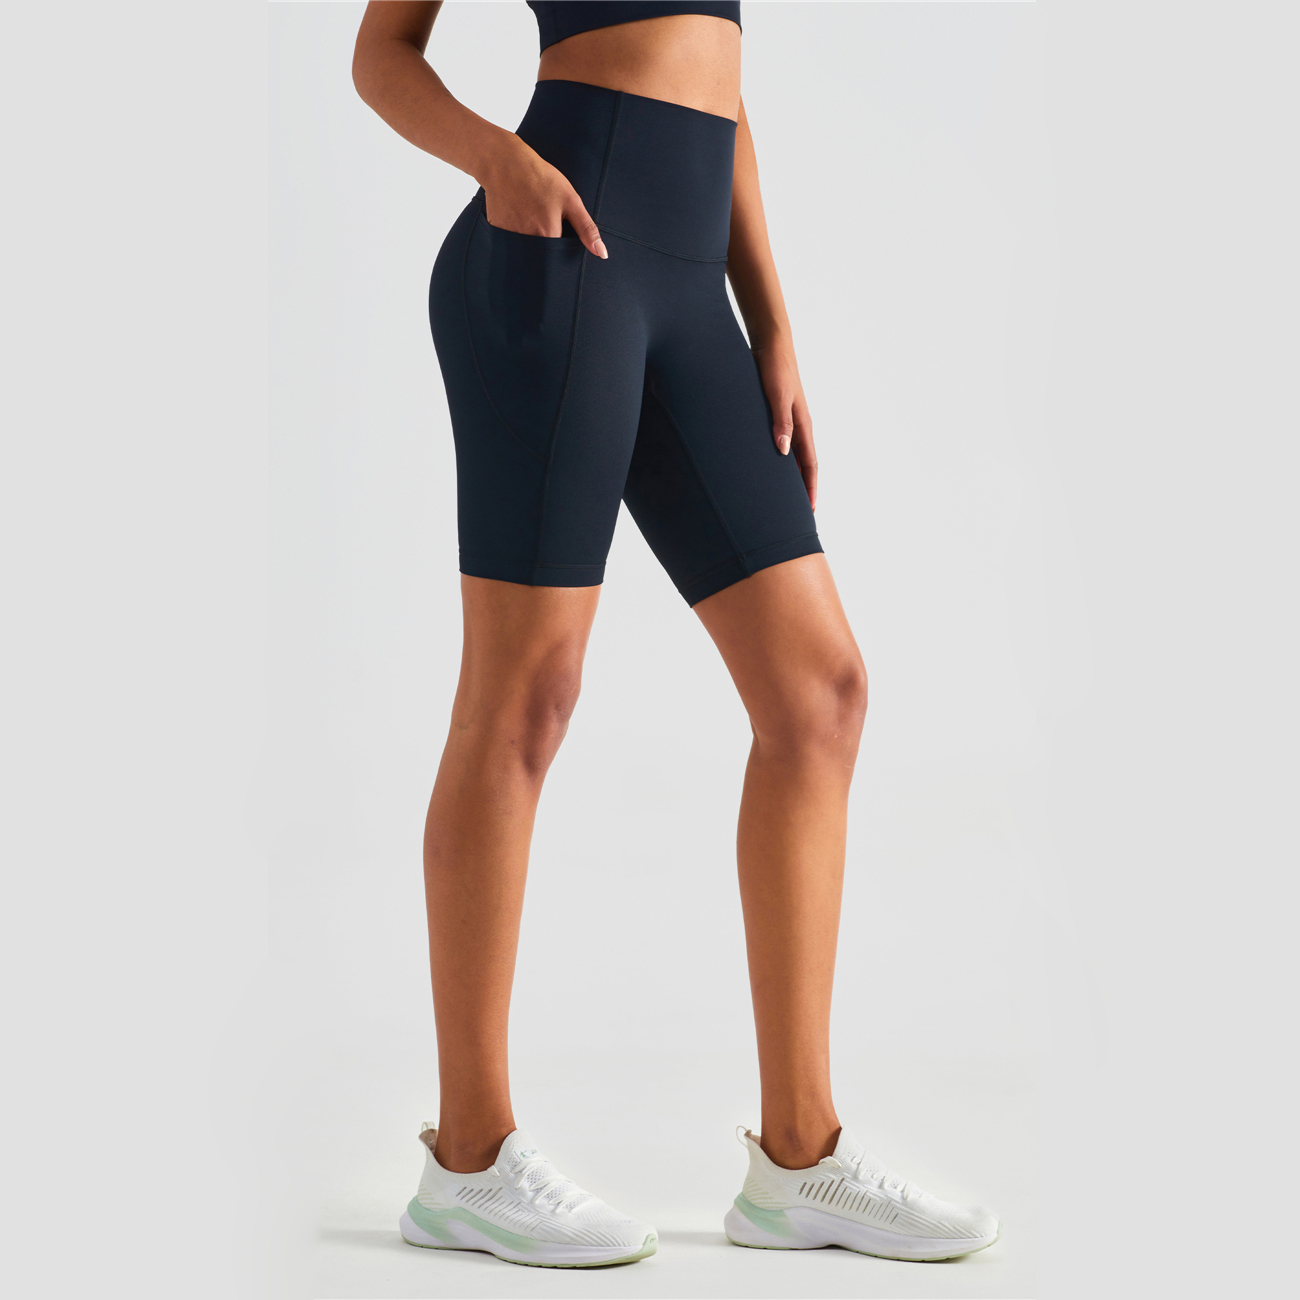 Women's Leggings High Waist Yoga Pants Gym Workout Shrink Lift Sports Shorts  SYF | eBay